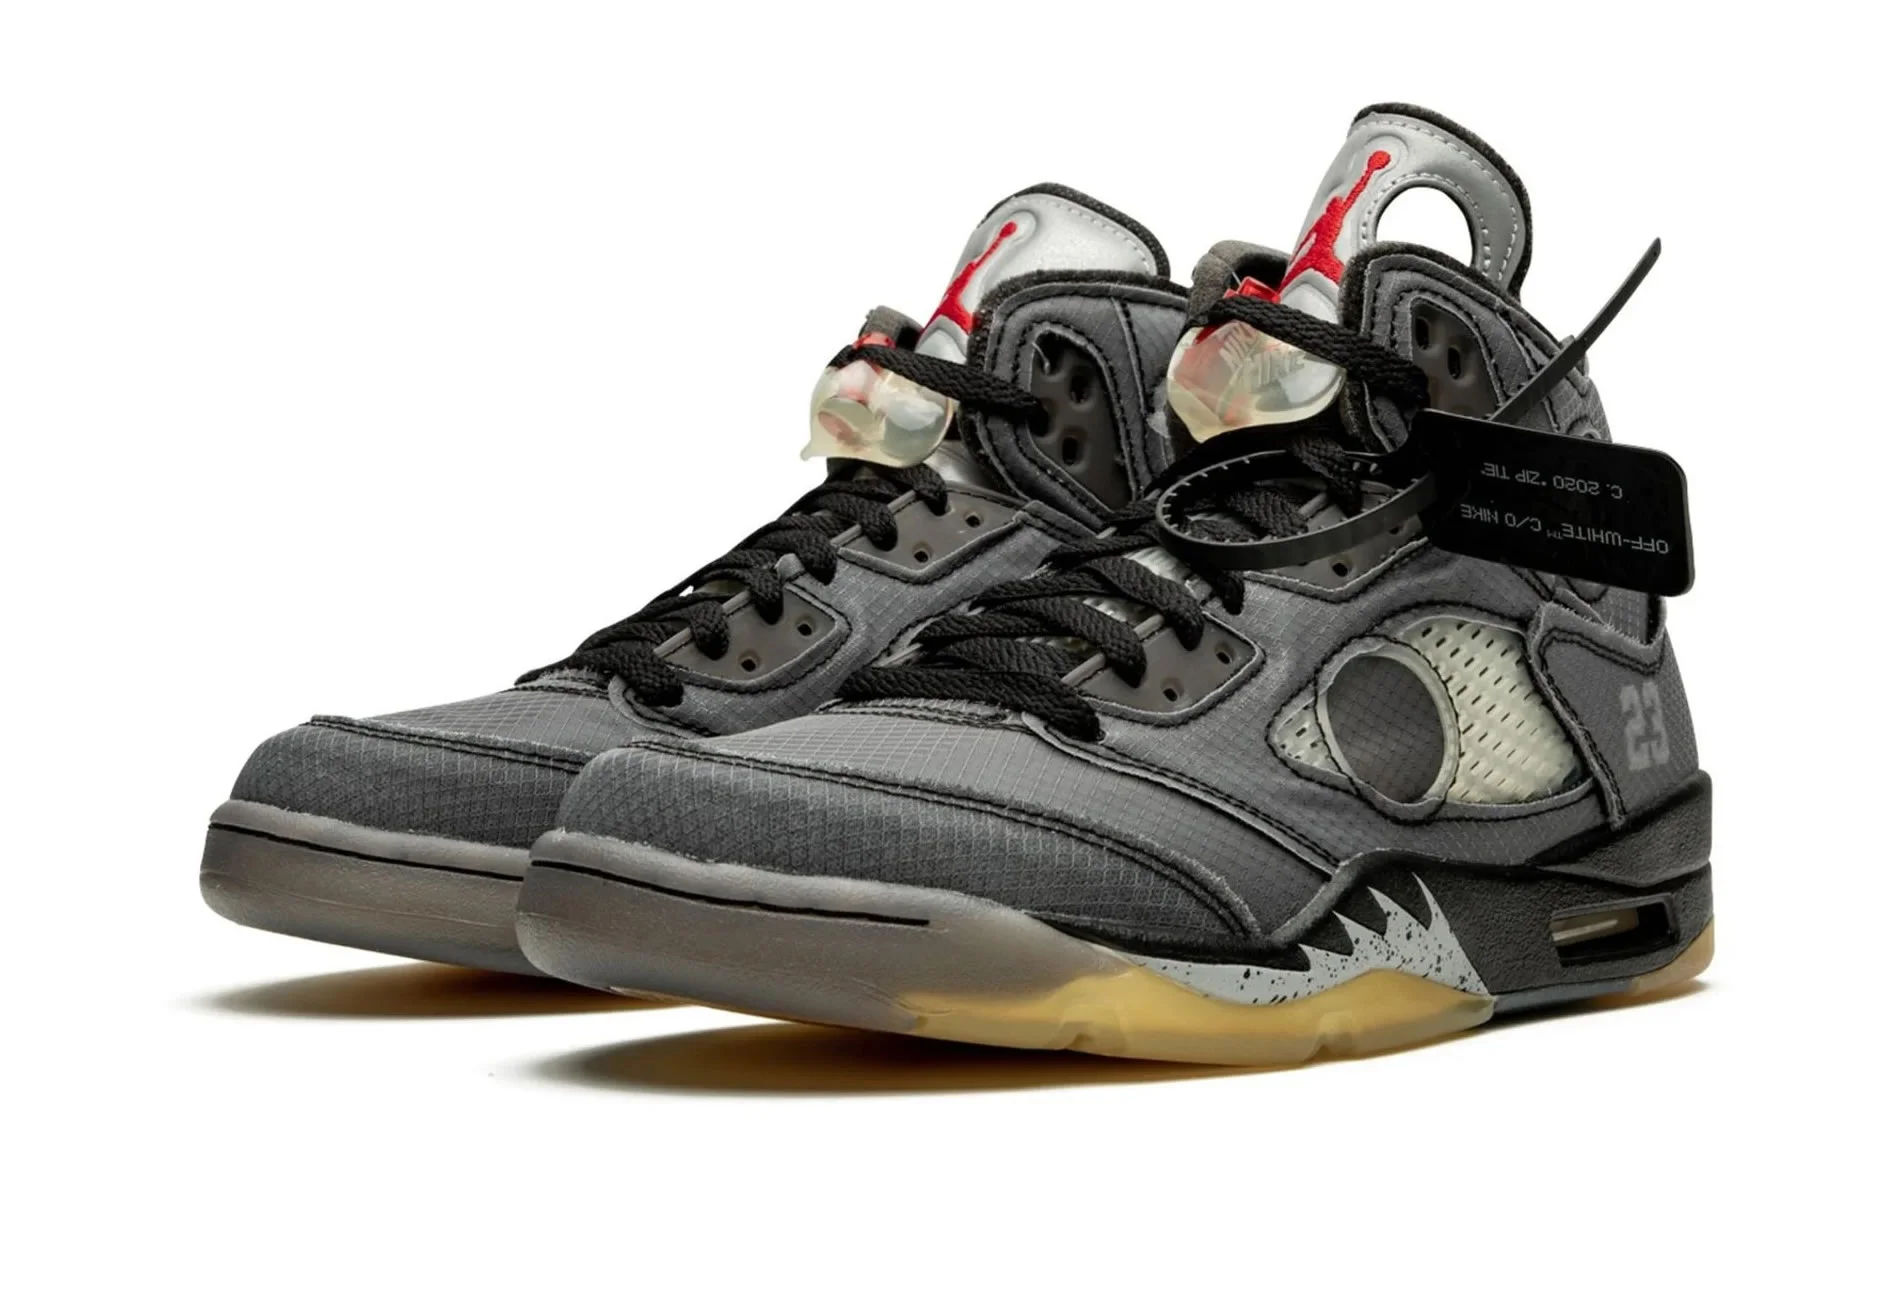 Air Jordan 5 Retro Sp Off White Ct8480 001 Ljr Batch Sneakers (3) - www.ljrofficial.com